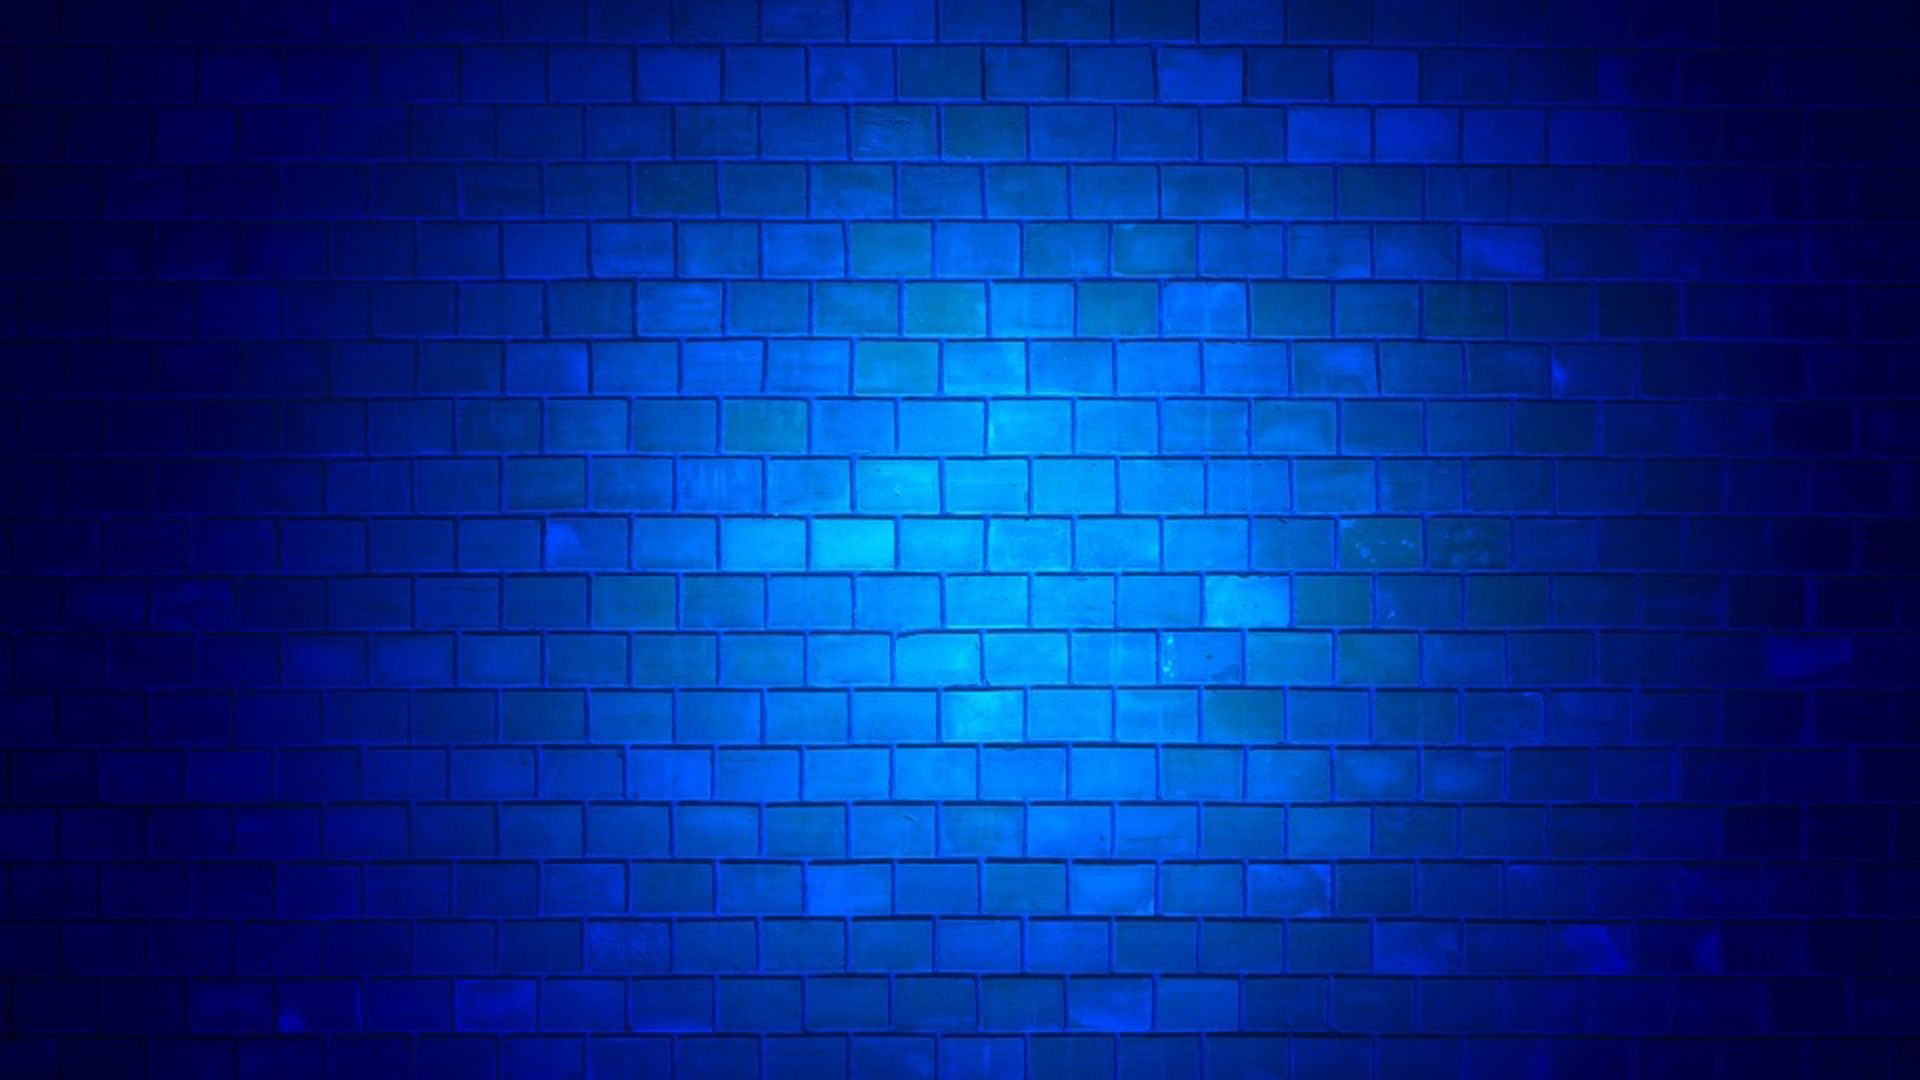 A blue brick wall with bright light - Dark blue, navy blue